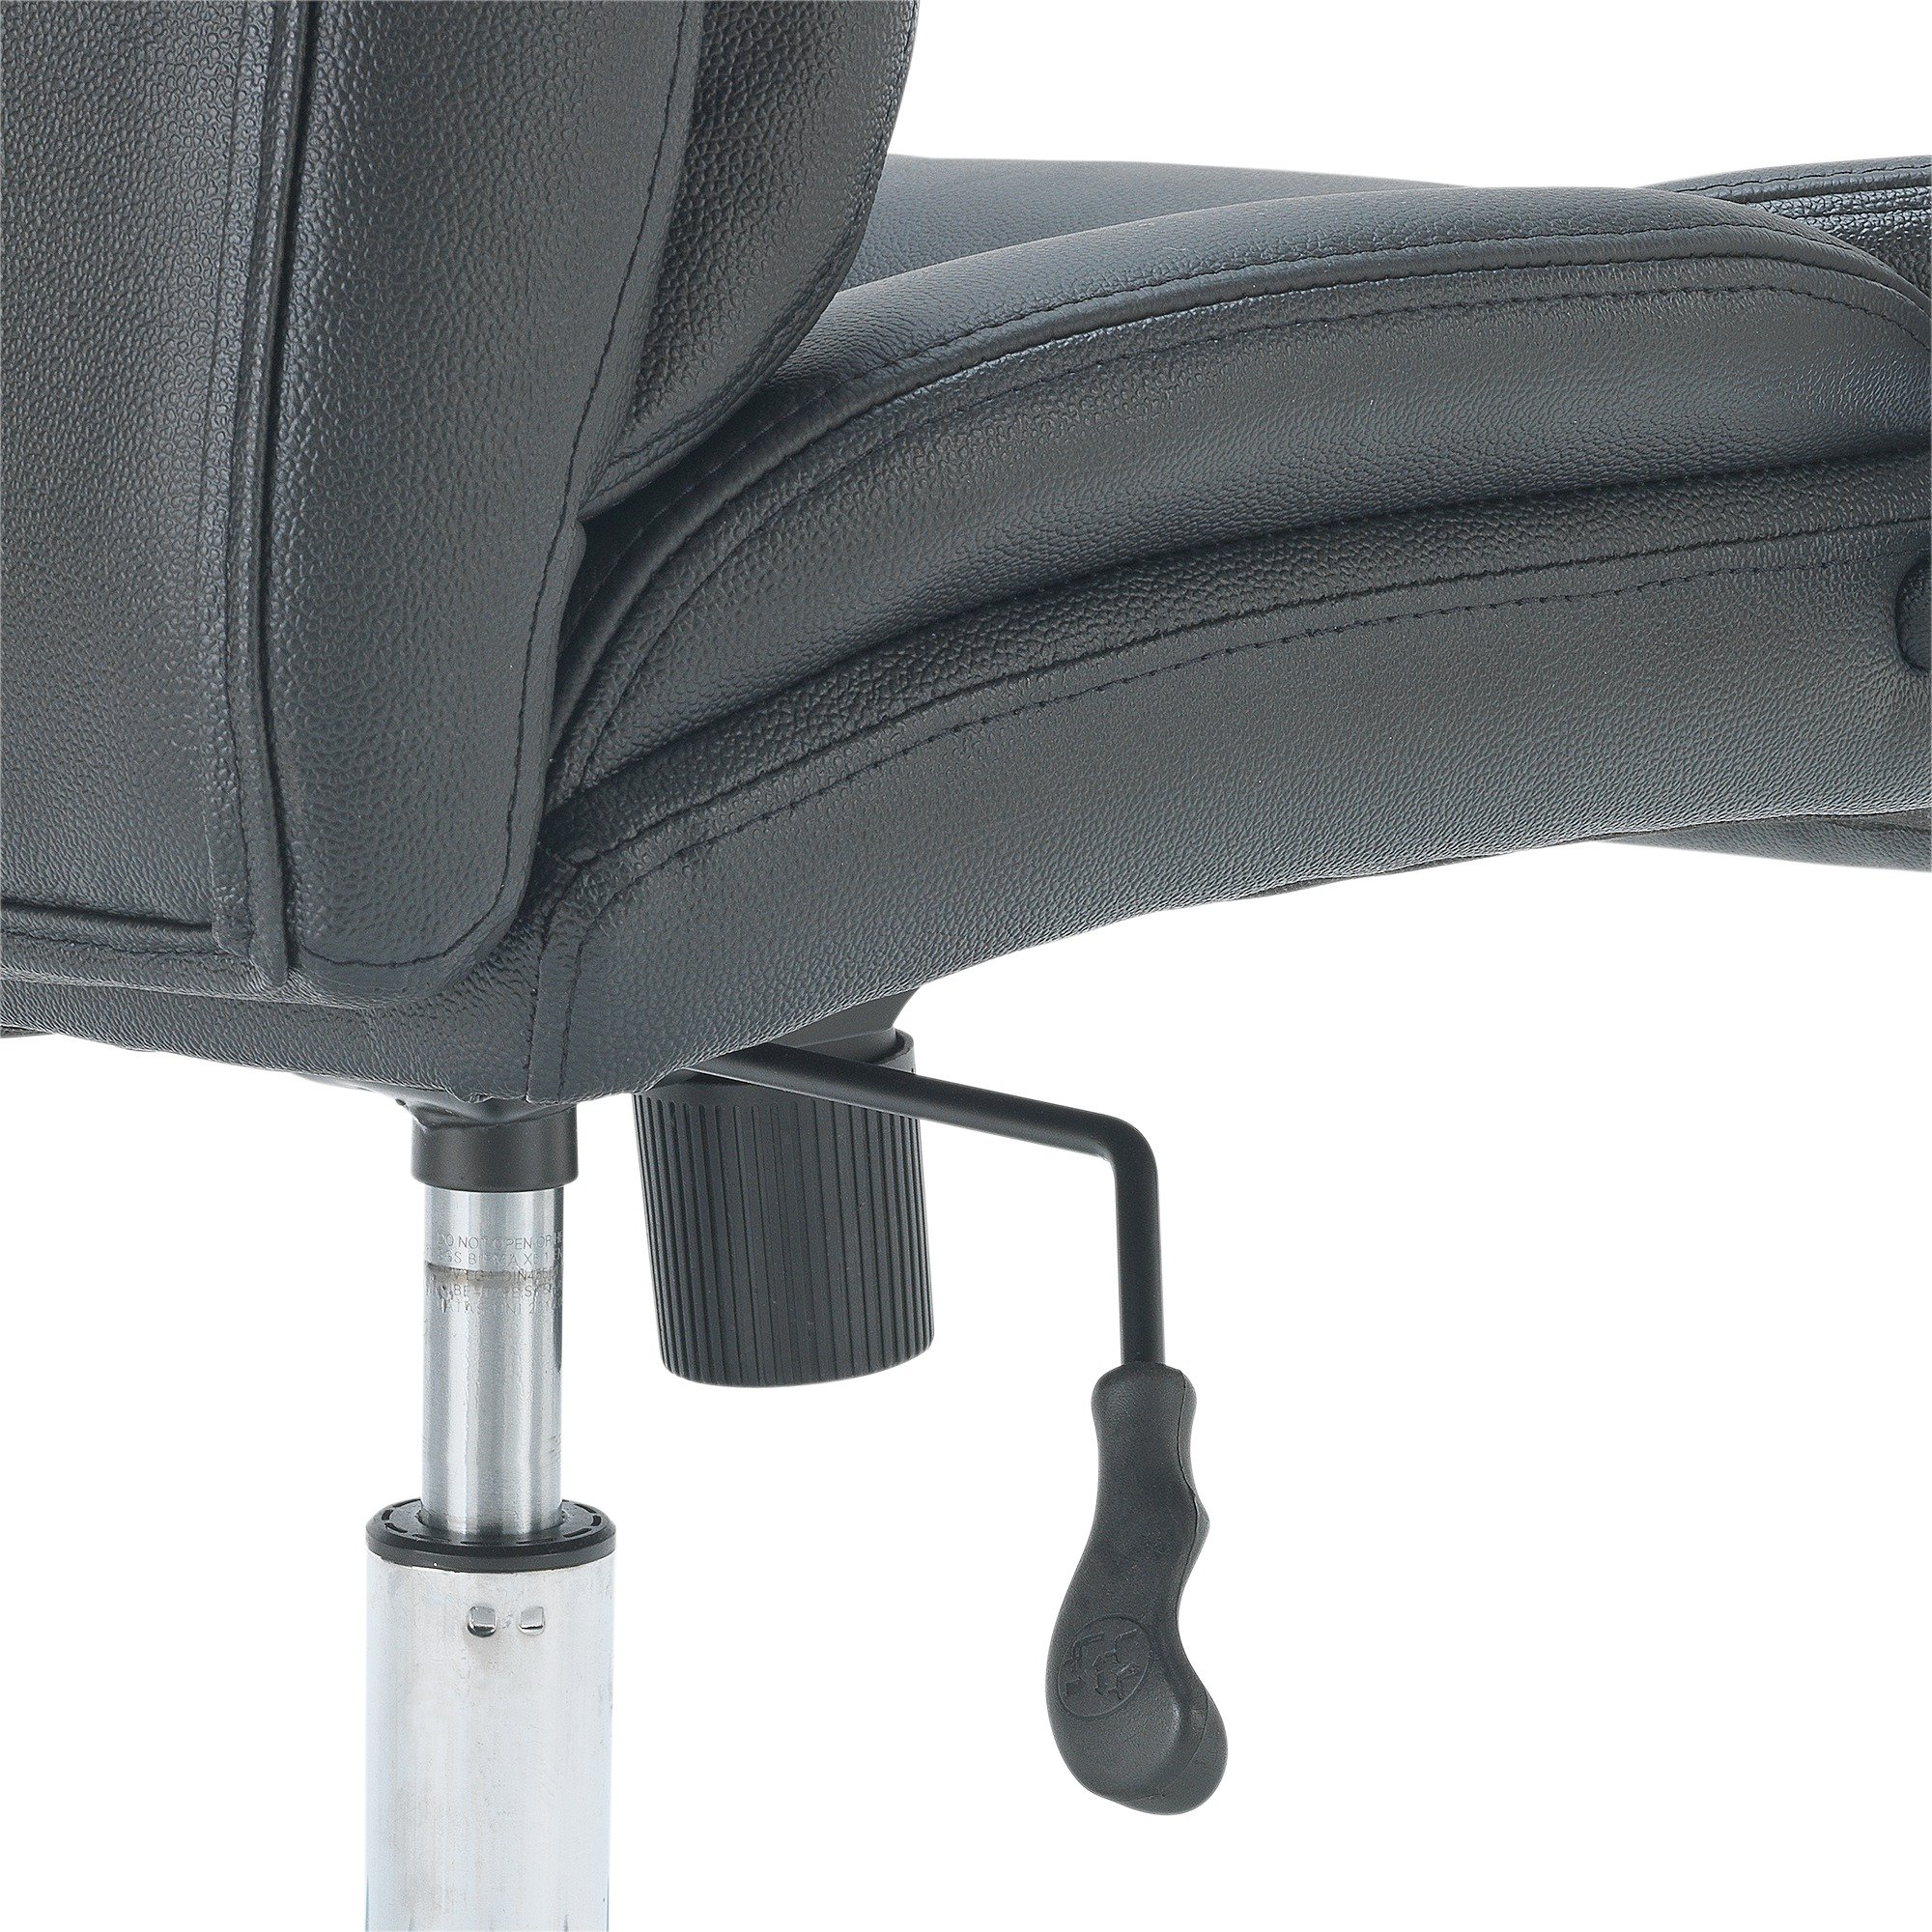 Habitat Leather Faced Ergonomic Office Chair - Black